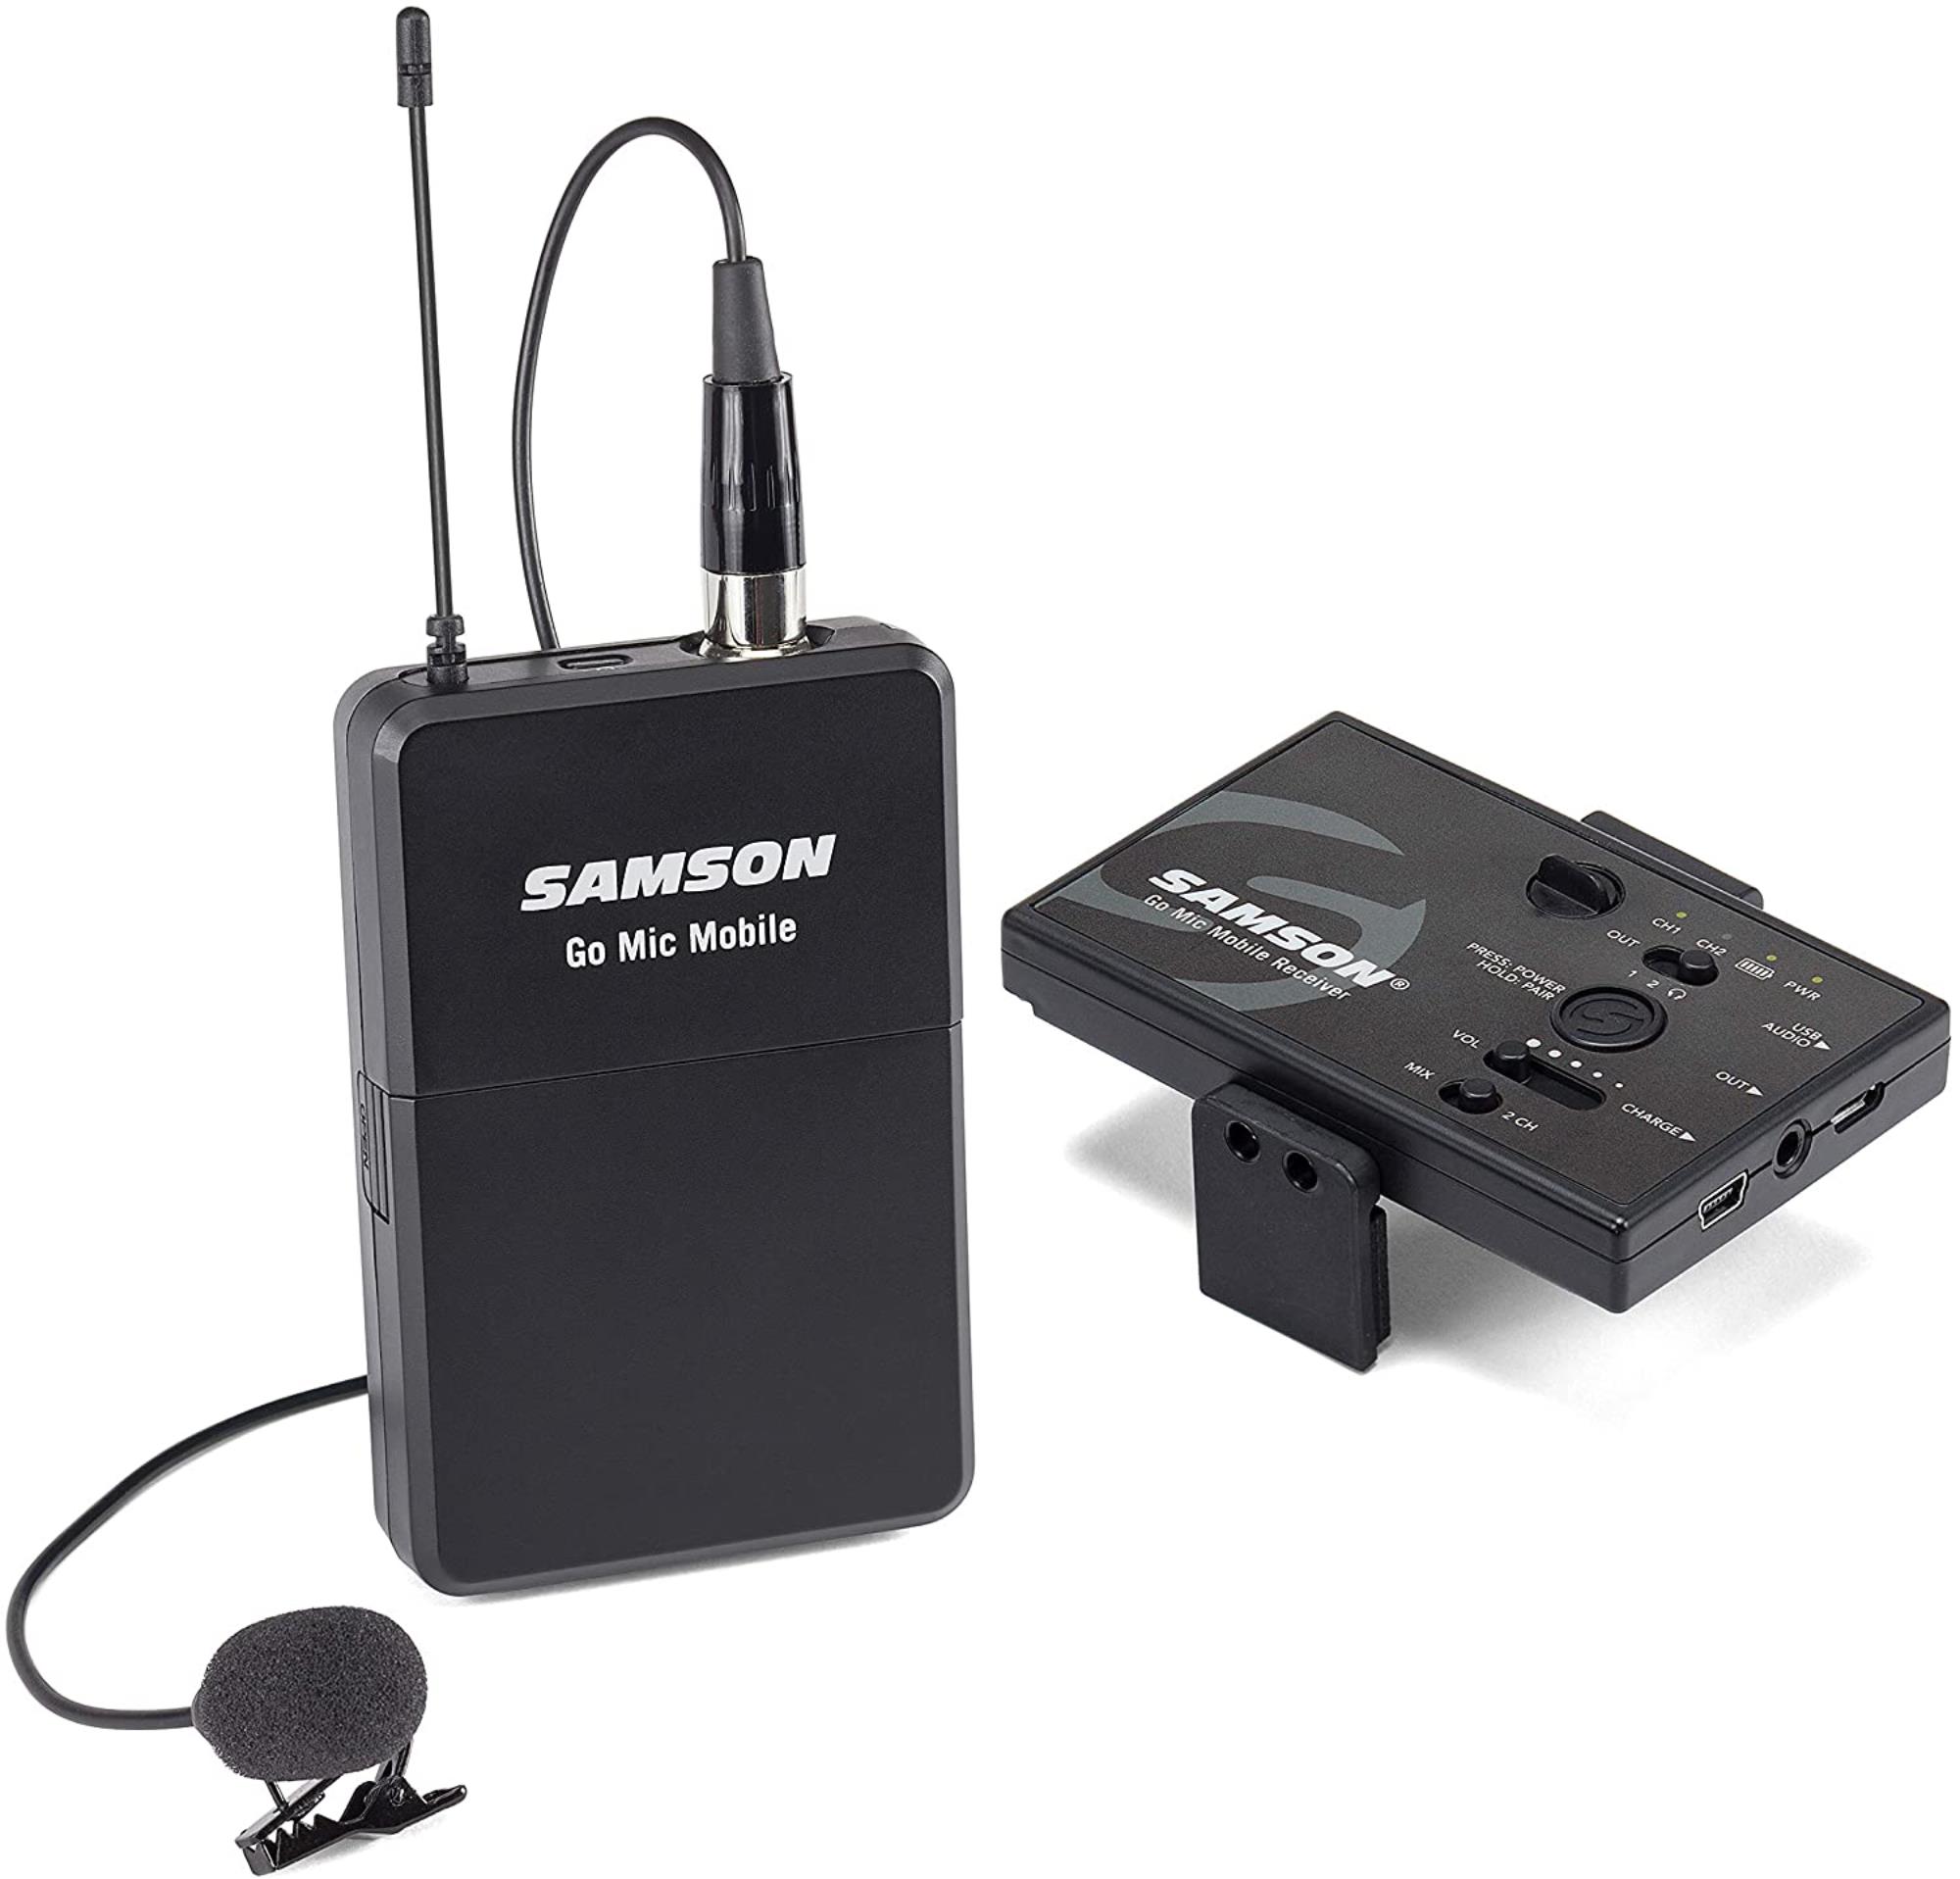 SAMSON Go Mic Mobile Lavalier System - Voce - Audio Microfoni - Wireless Voce